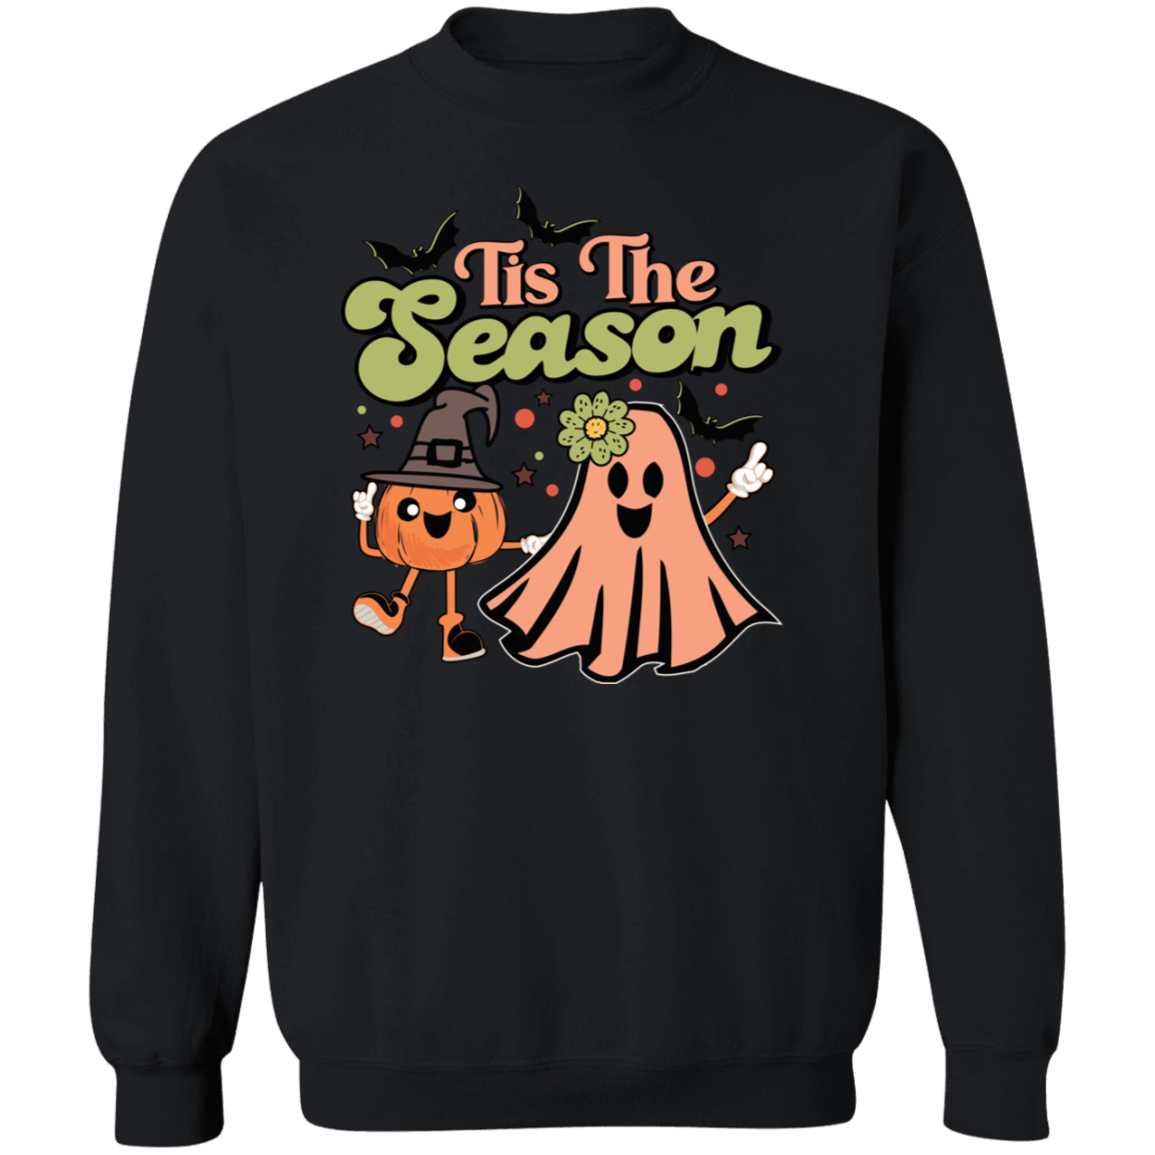 Tis the Season Spooktacular Shirt